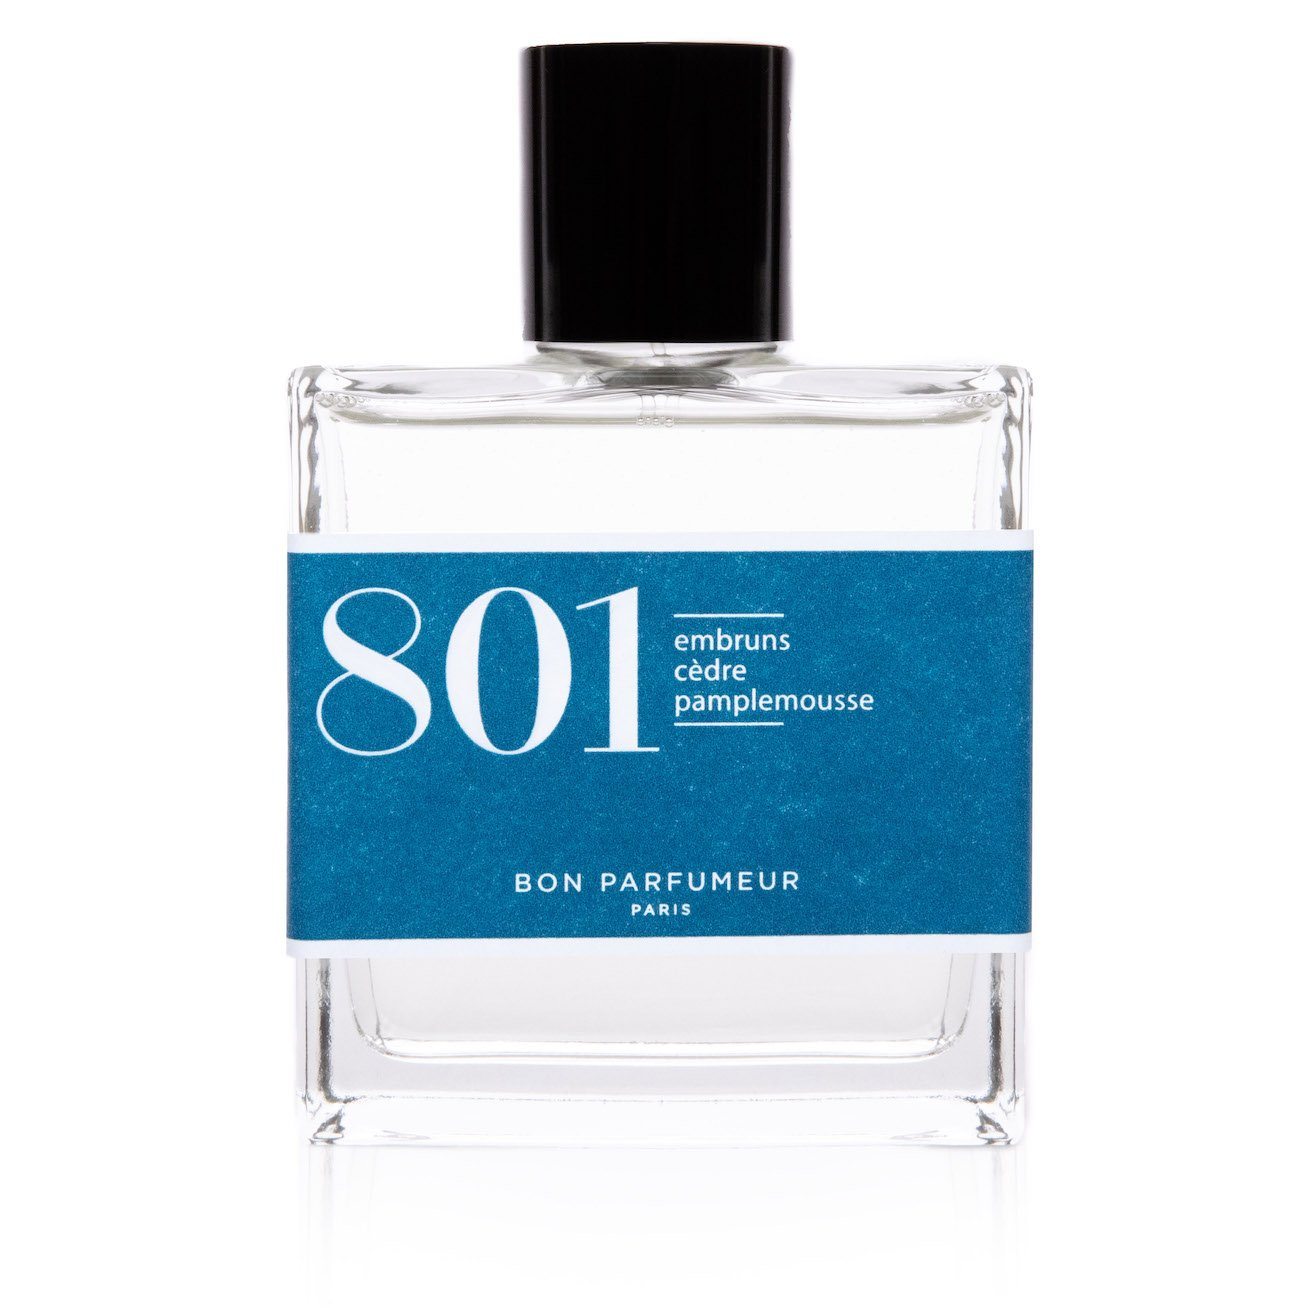 Bon Parfumeur Eau de parfum 801: sea spray, cedar and grapefruit 30 ml